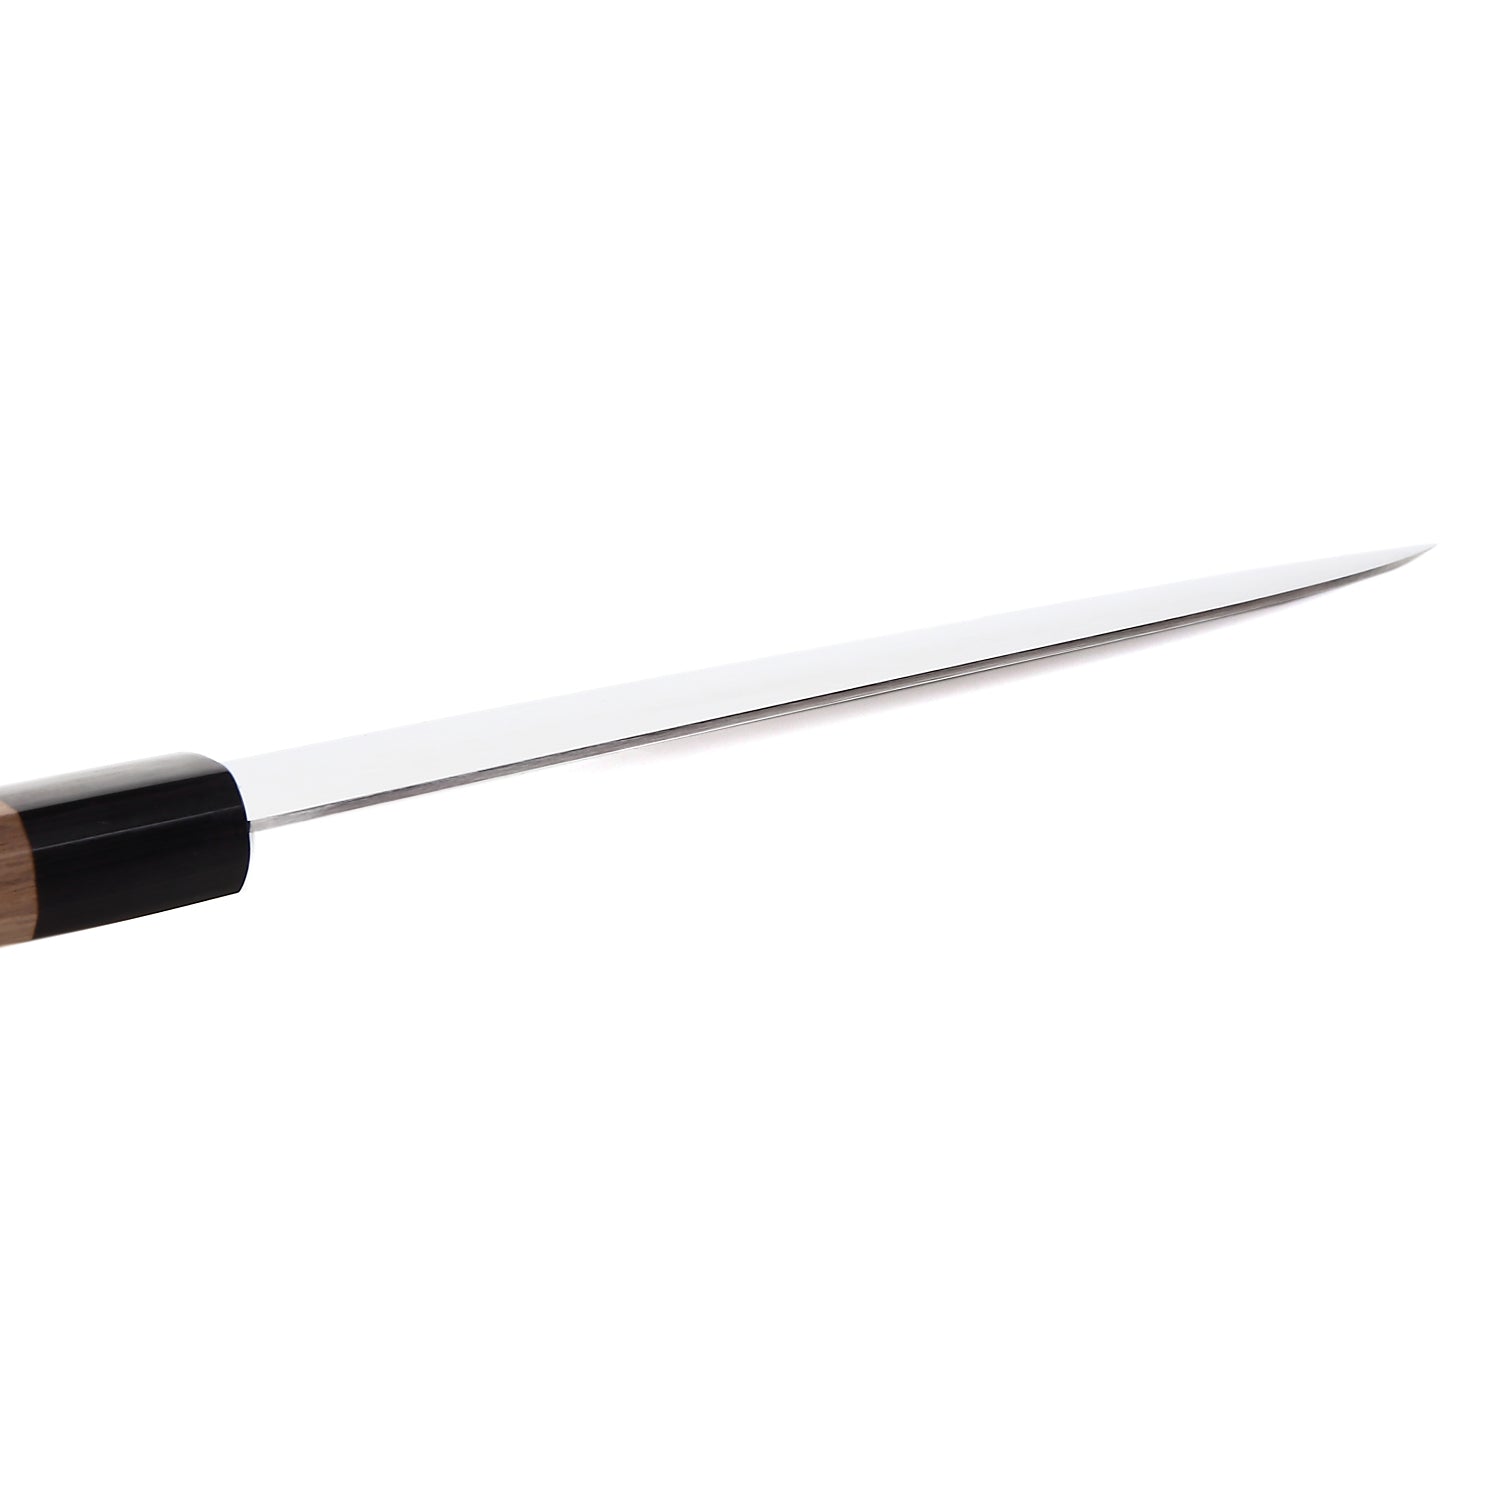 Syosaku Japanese Chef Knife Premium Molybdenum Stainless Steel, Gyuto 8.3-Inch (210mm)